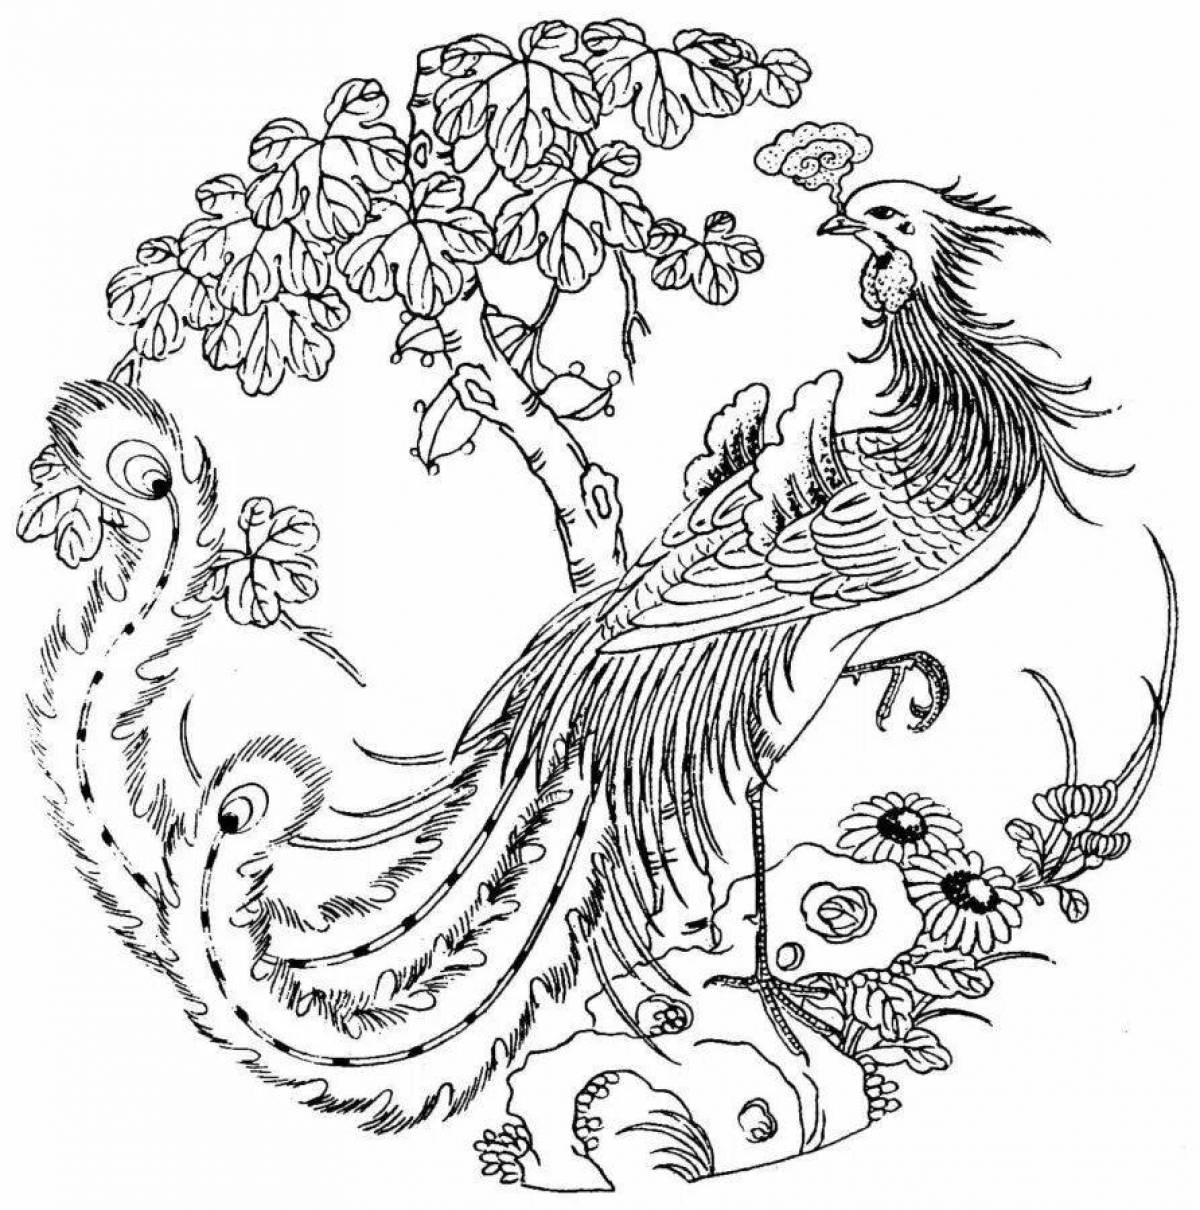 Royal Chinese motif coloring page